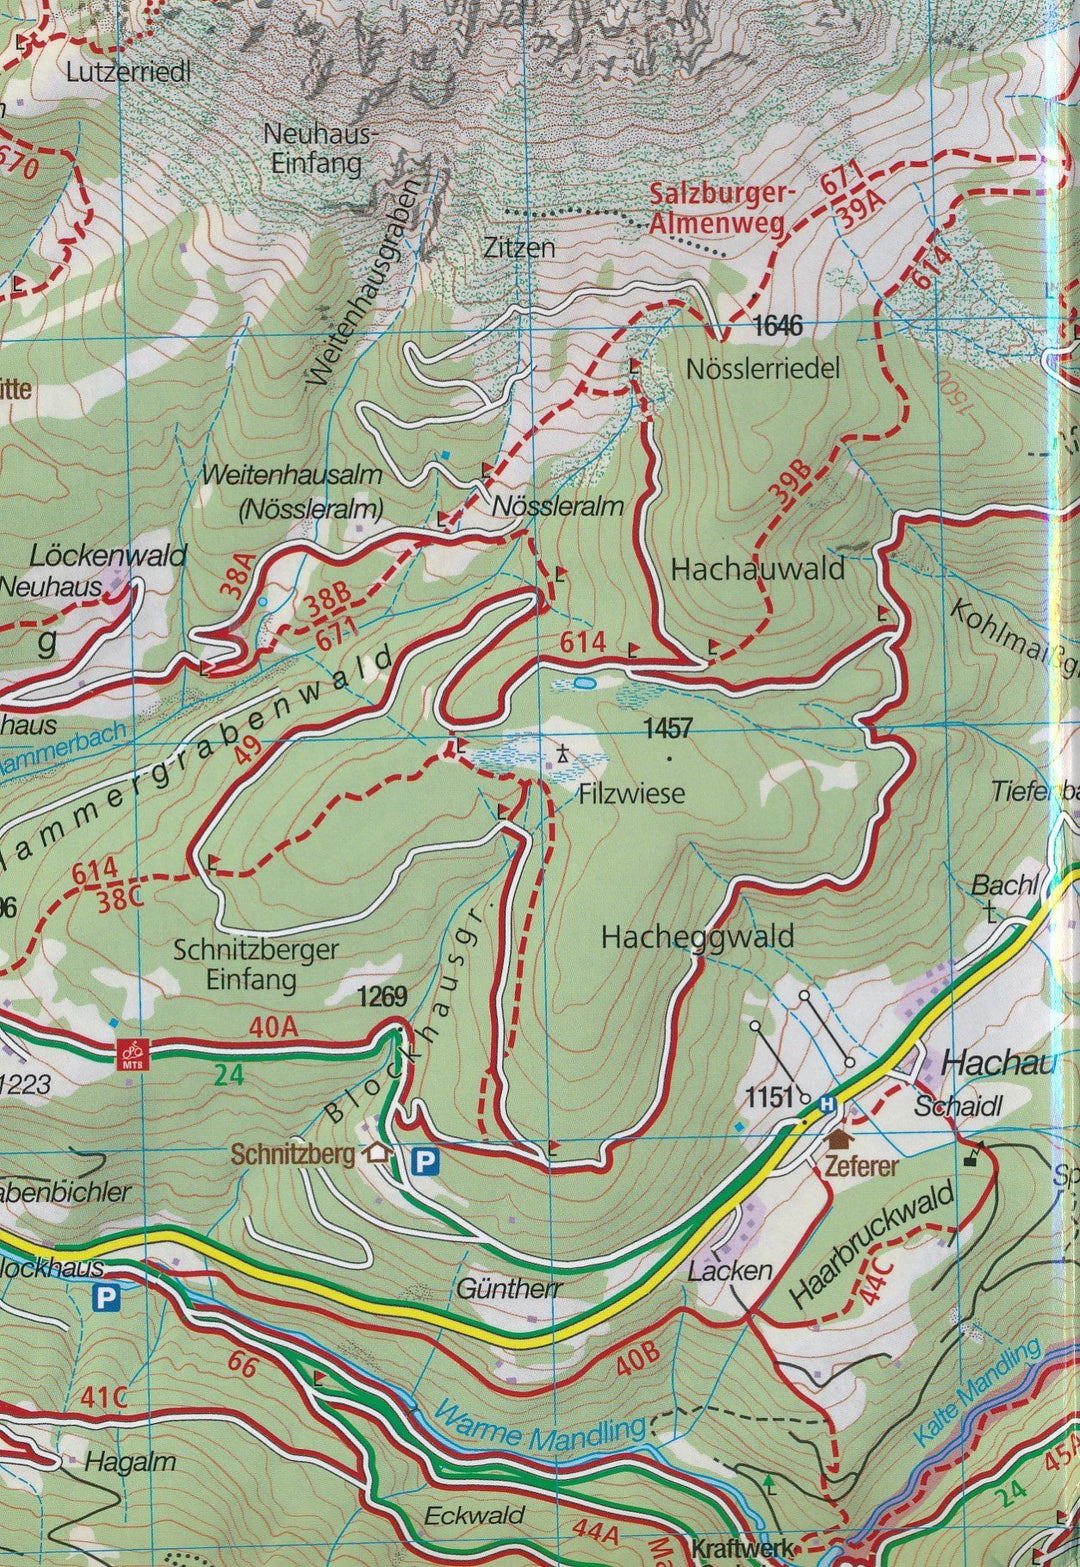 Carte de randonnée n° 145 - Pragser Dolomiten NP Fanes-Sennes-Prags + Aktiv Guide (Italie) | Kompass carte pliée Kompass 